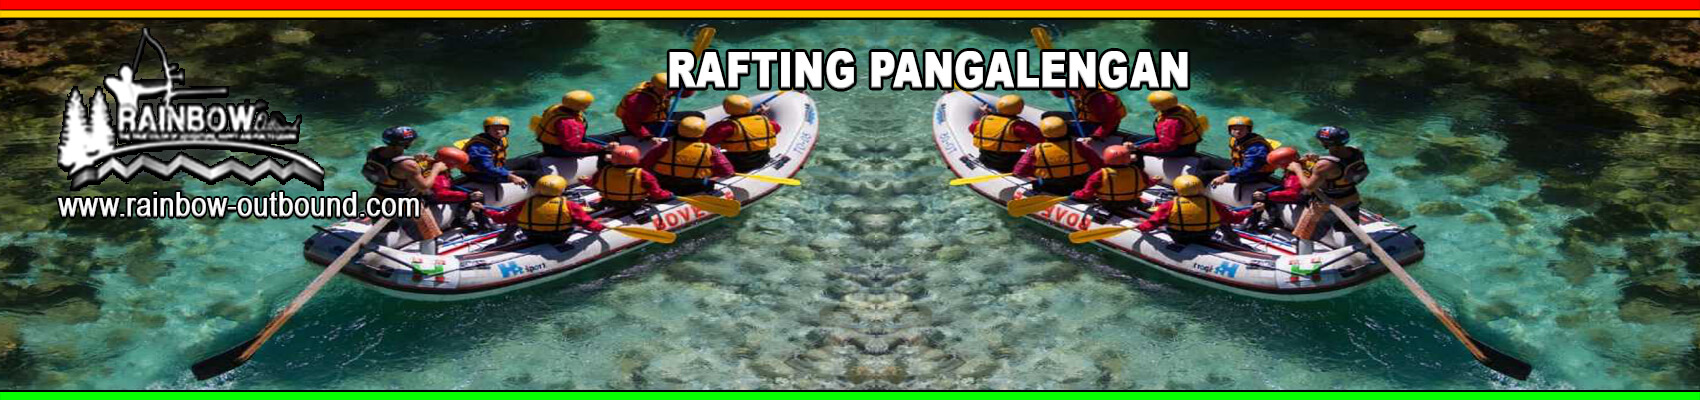 rafting pangalengan